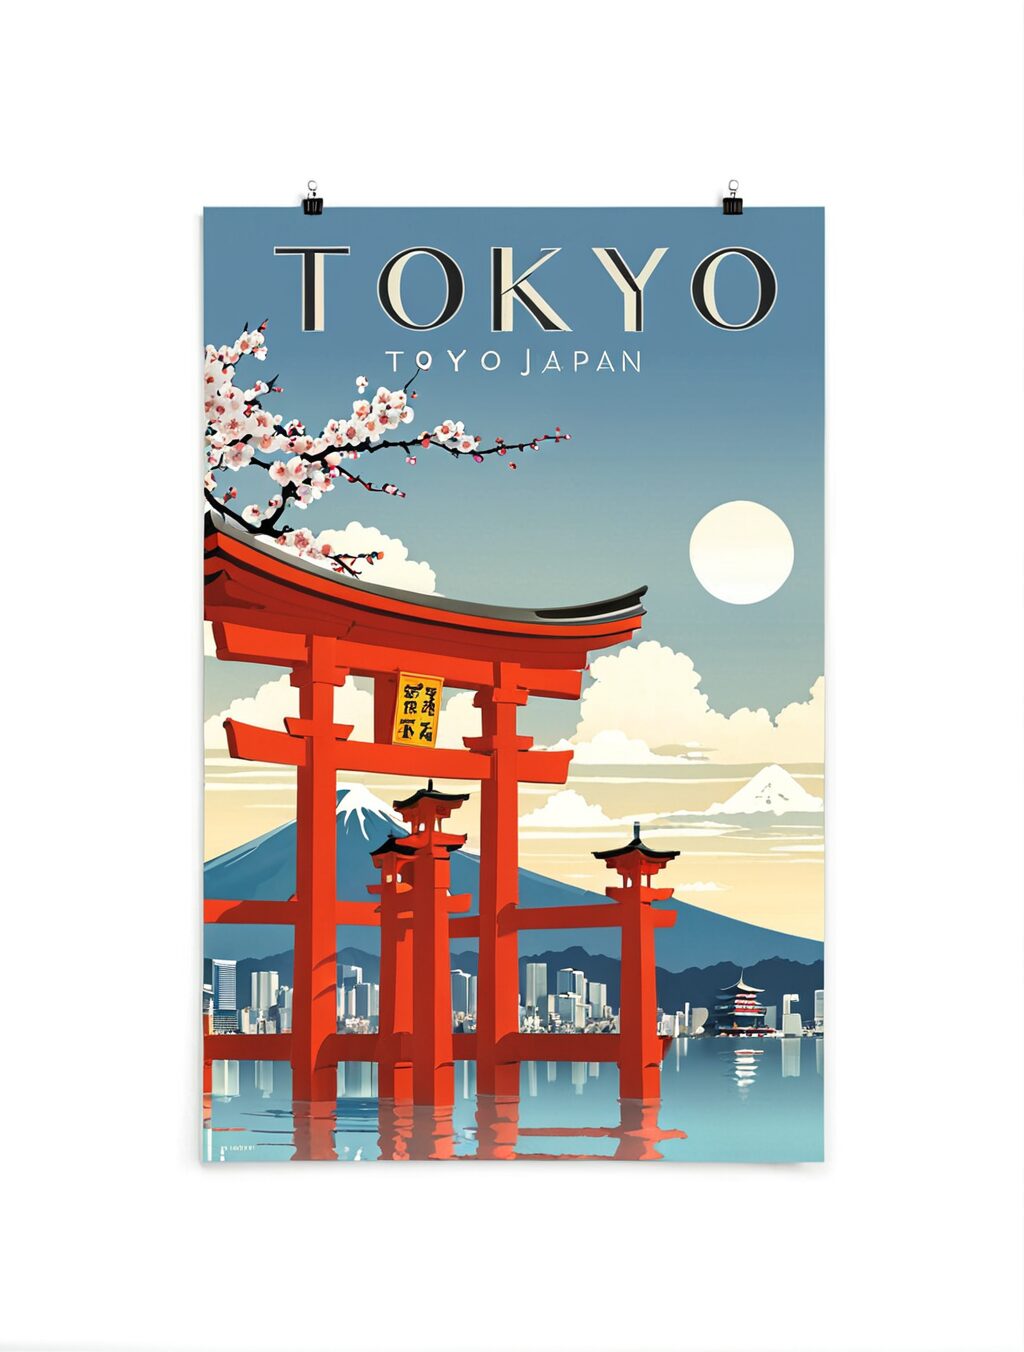 tokyo japan travel poster